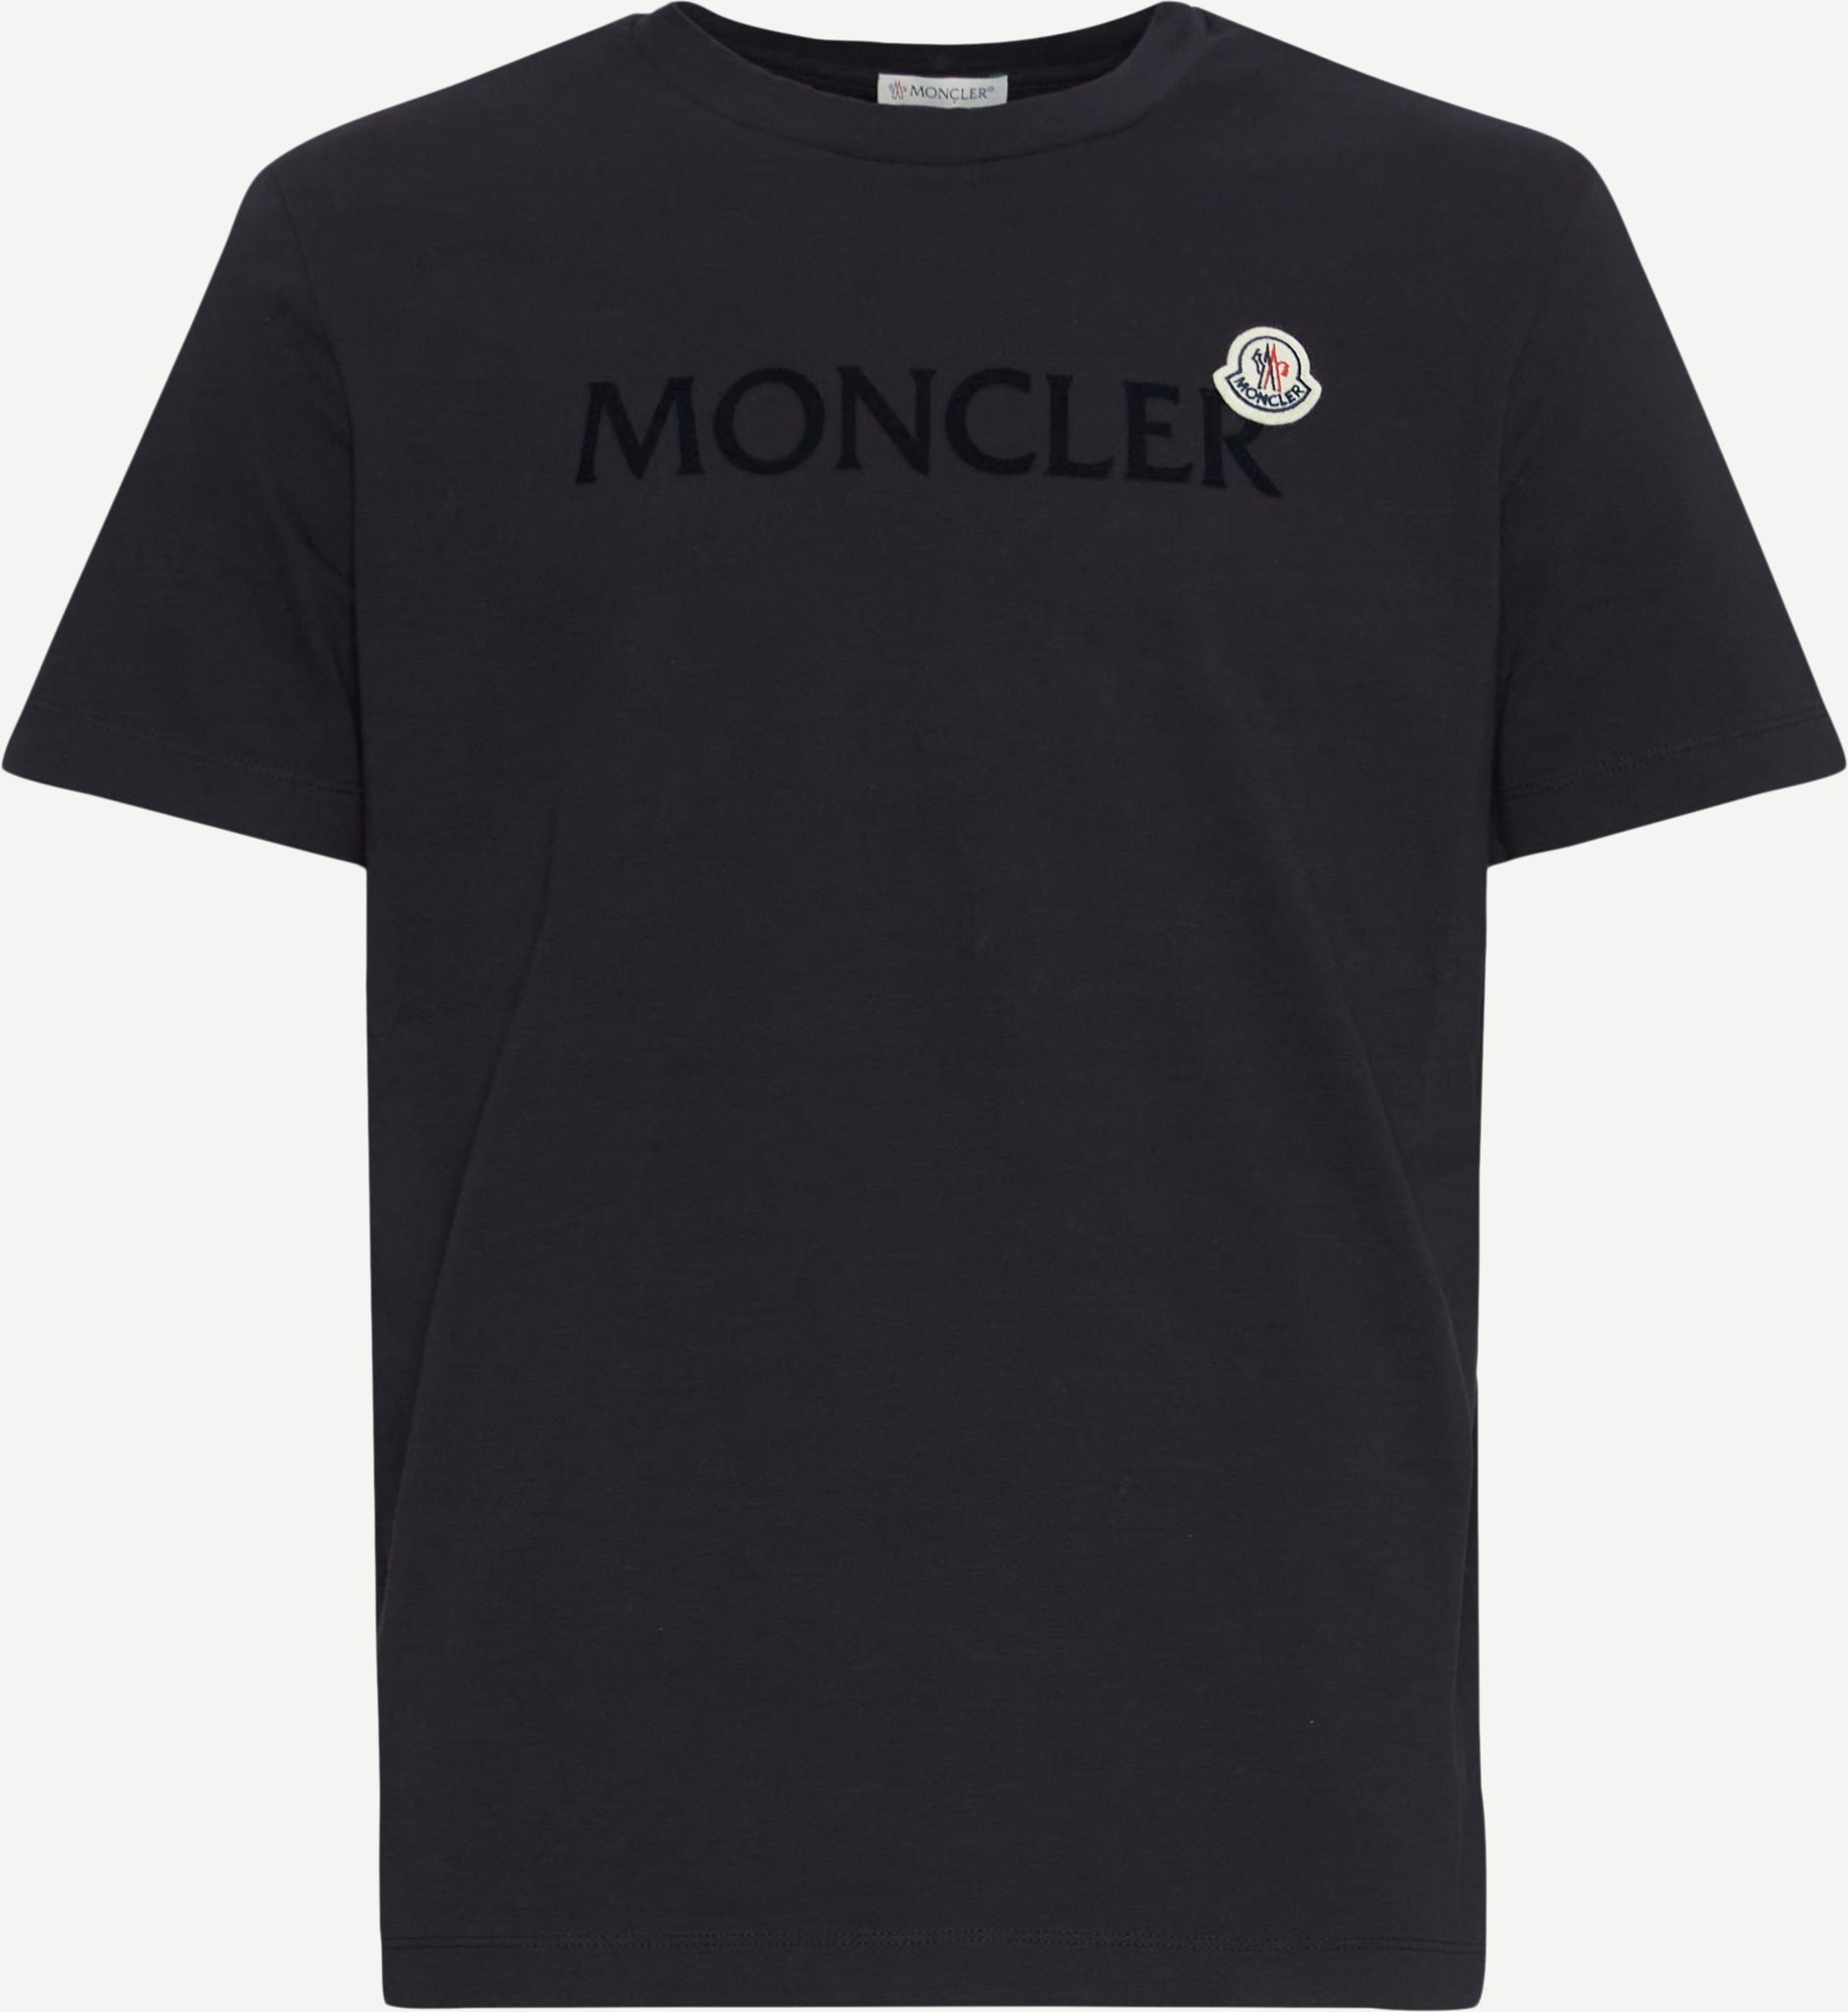 Moncler T-shirts 8C00057 8390T Blå